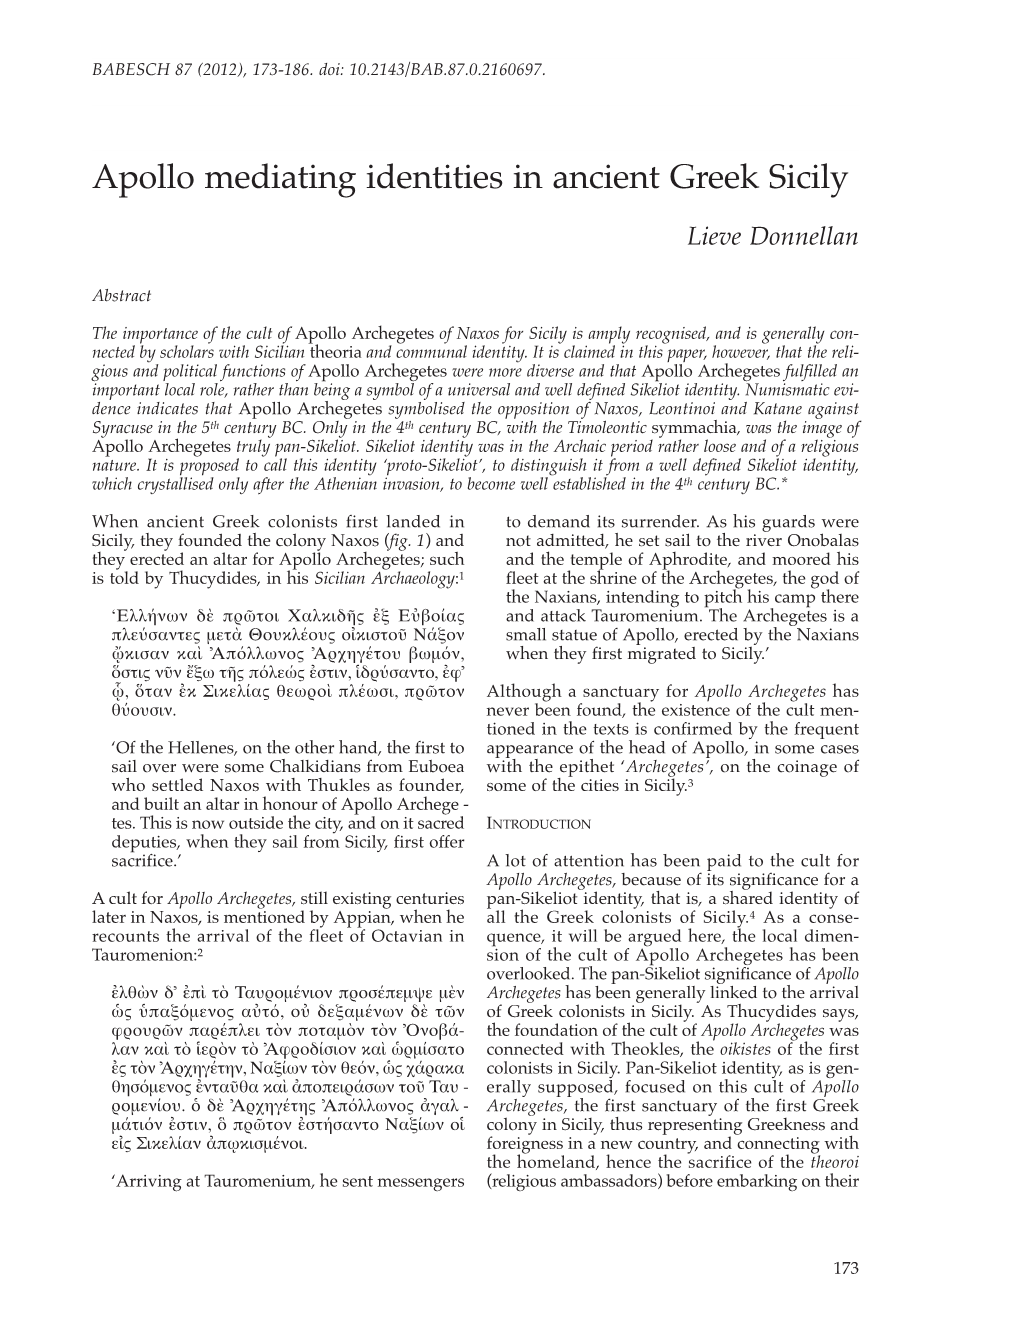 Apollo Mediating Identities in Ancient Greek Sicily